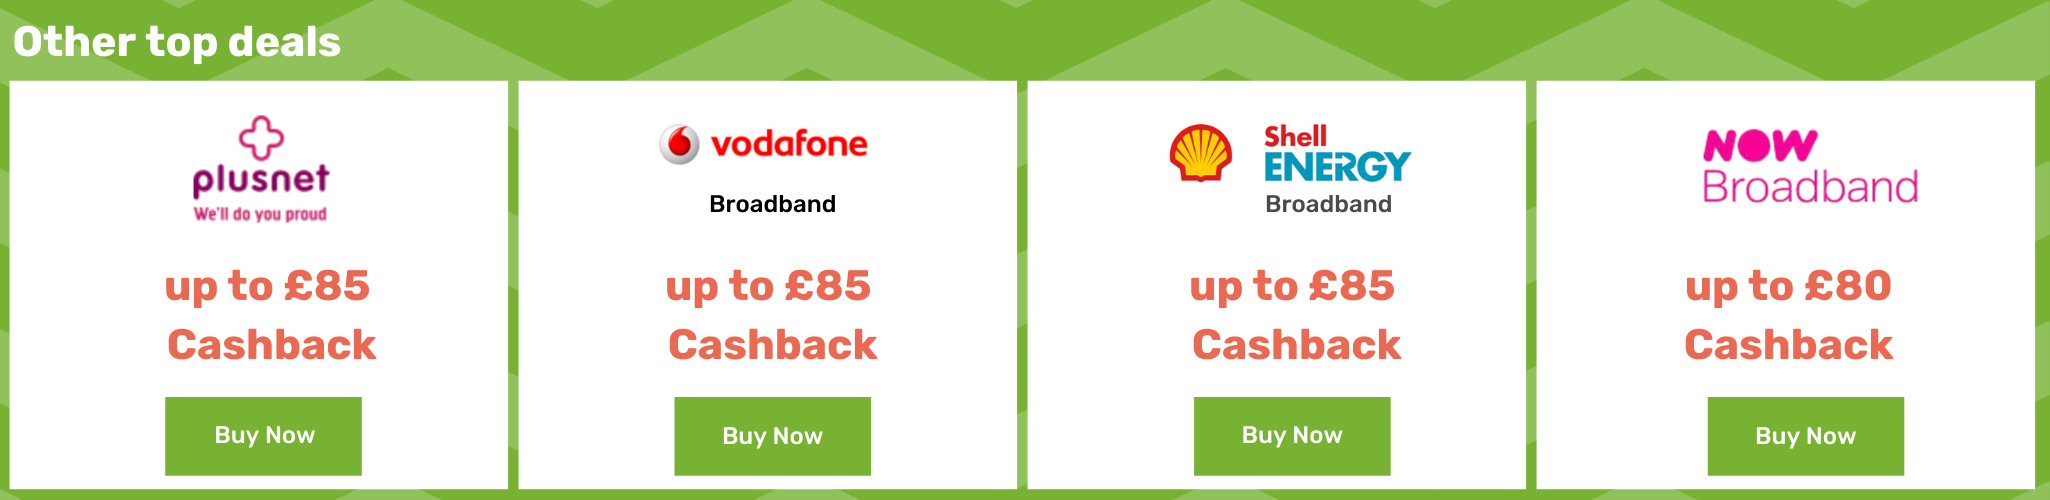 Plusnet up to £85 cashback - Vodafone Broadband up to £85 cashback - Shell Energy Broadband up to £85 cashback - Now Broadband up to £80 cashback